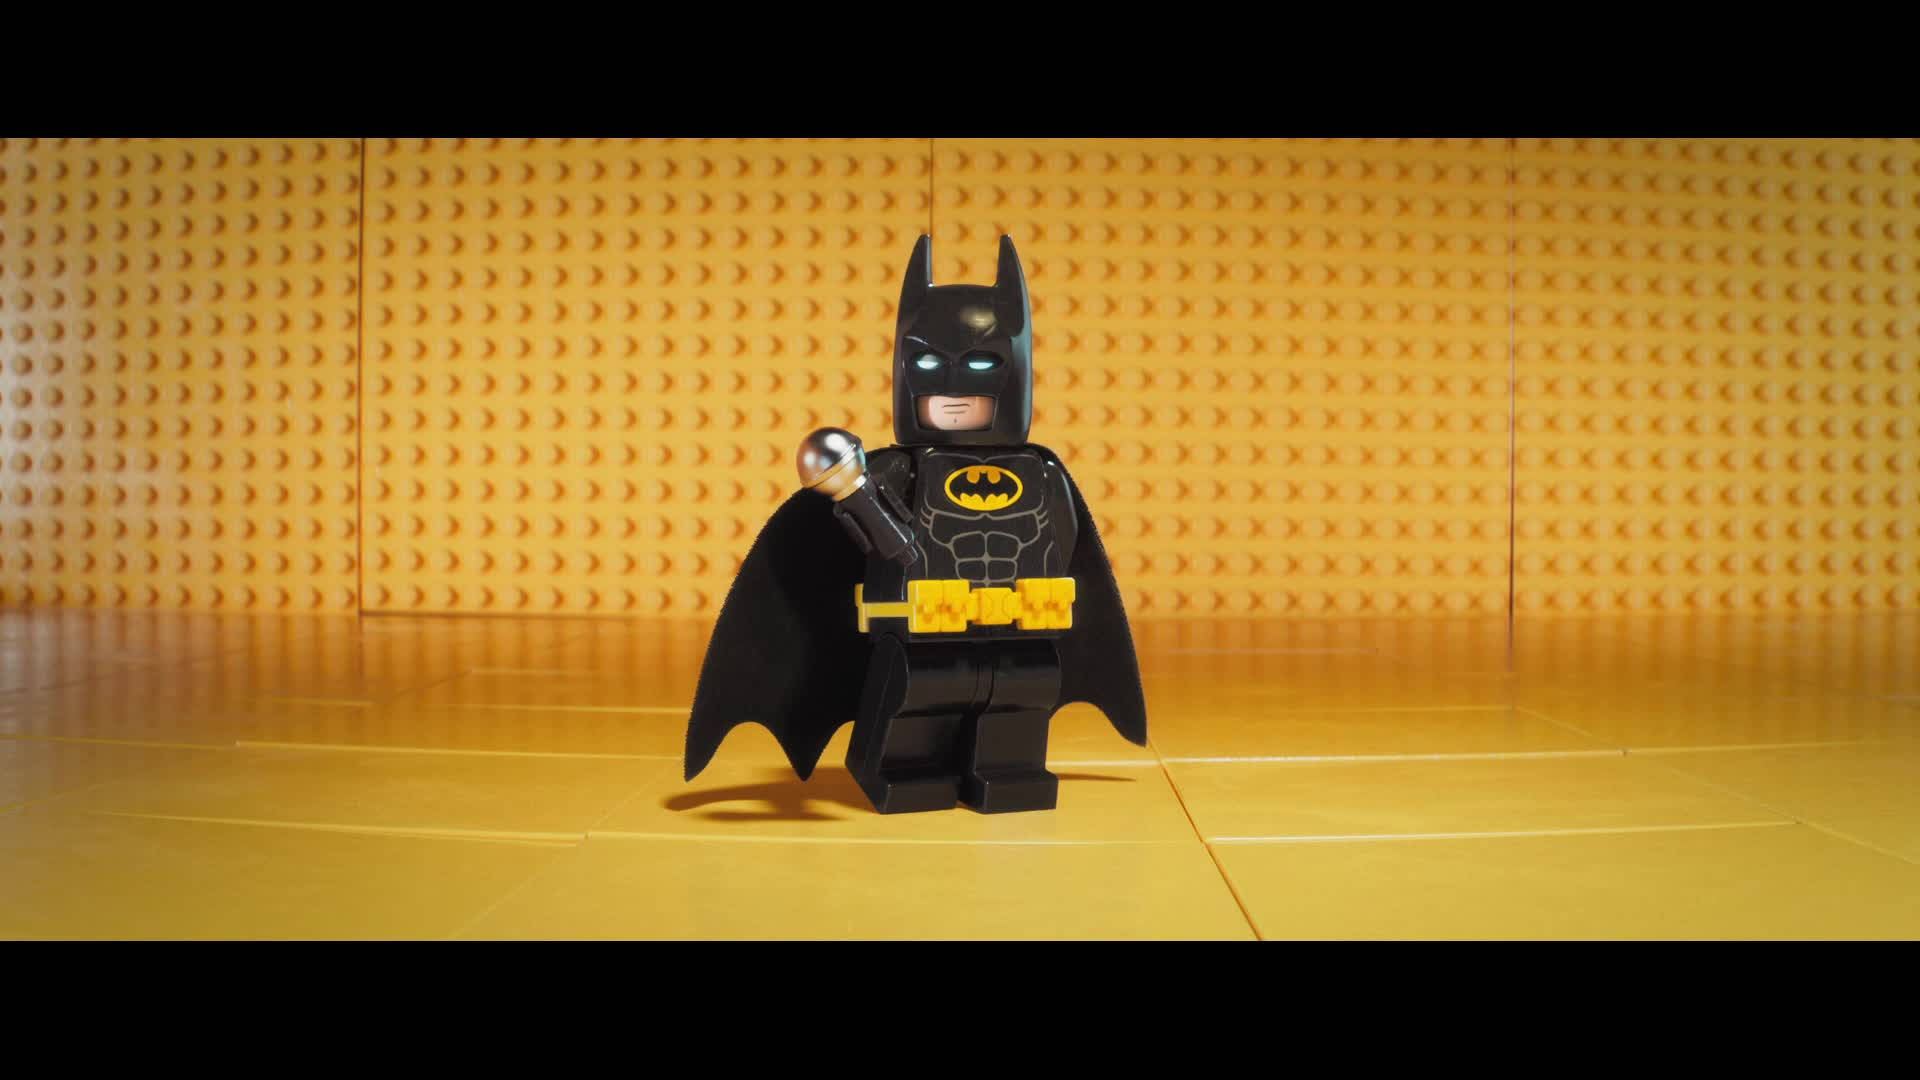 Photoshoot Of The Lego Batman Movie's Superhero Picture